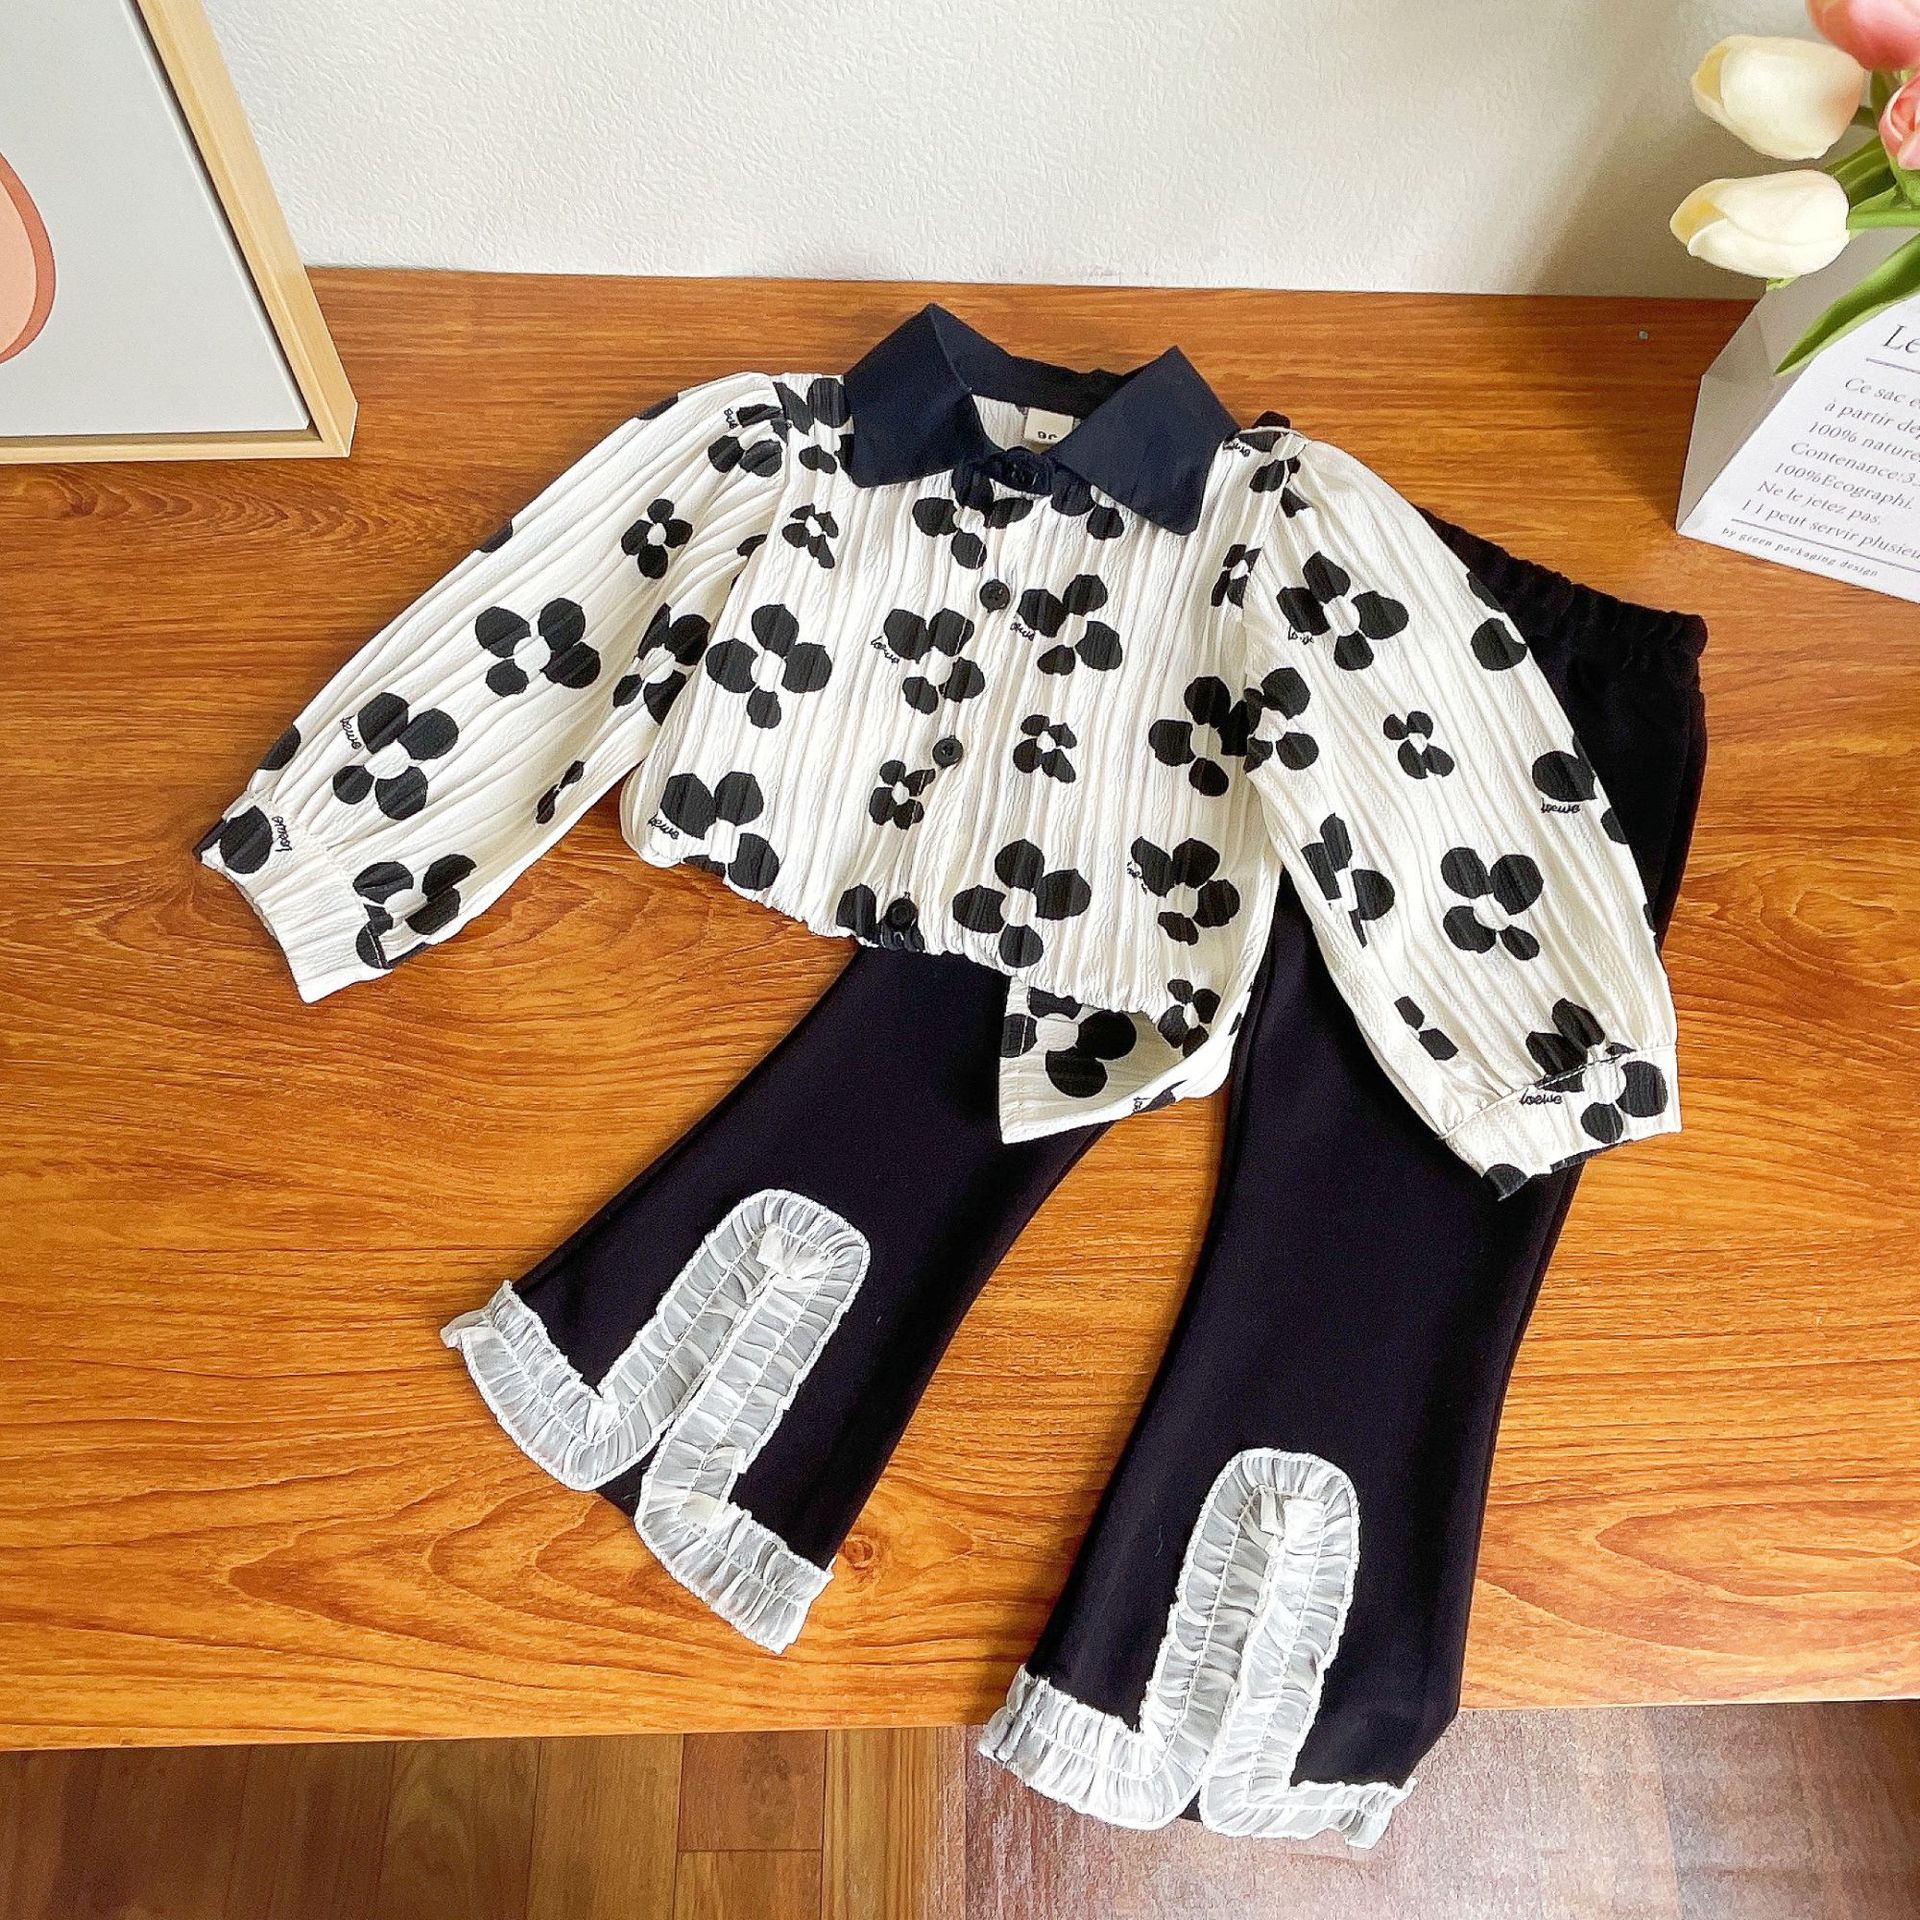 Ancorelala秋季新款女童套装花朵衬衣加可爱蕾丝喇叭裤两件套